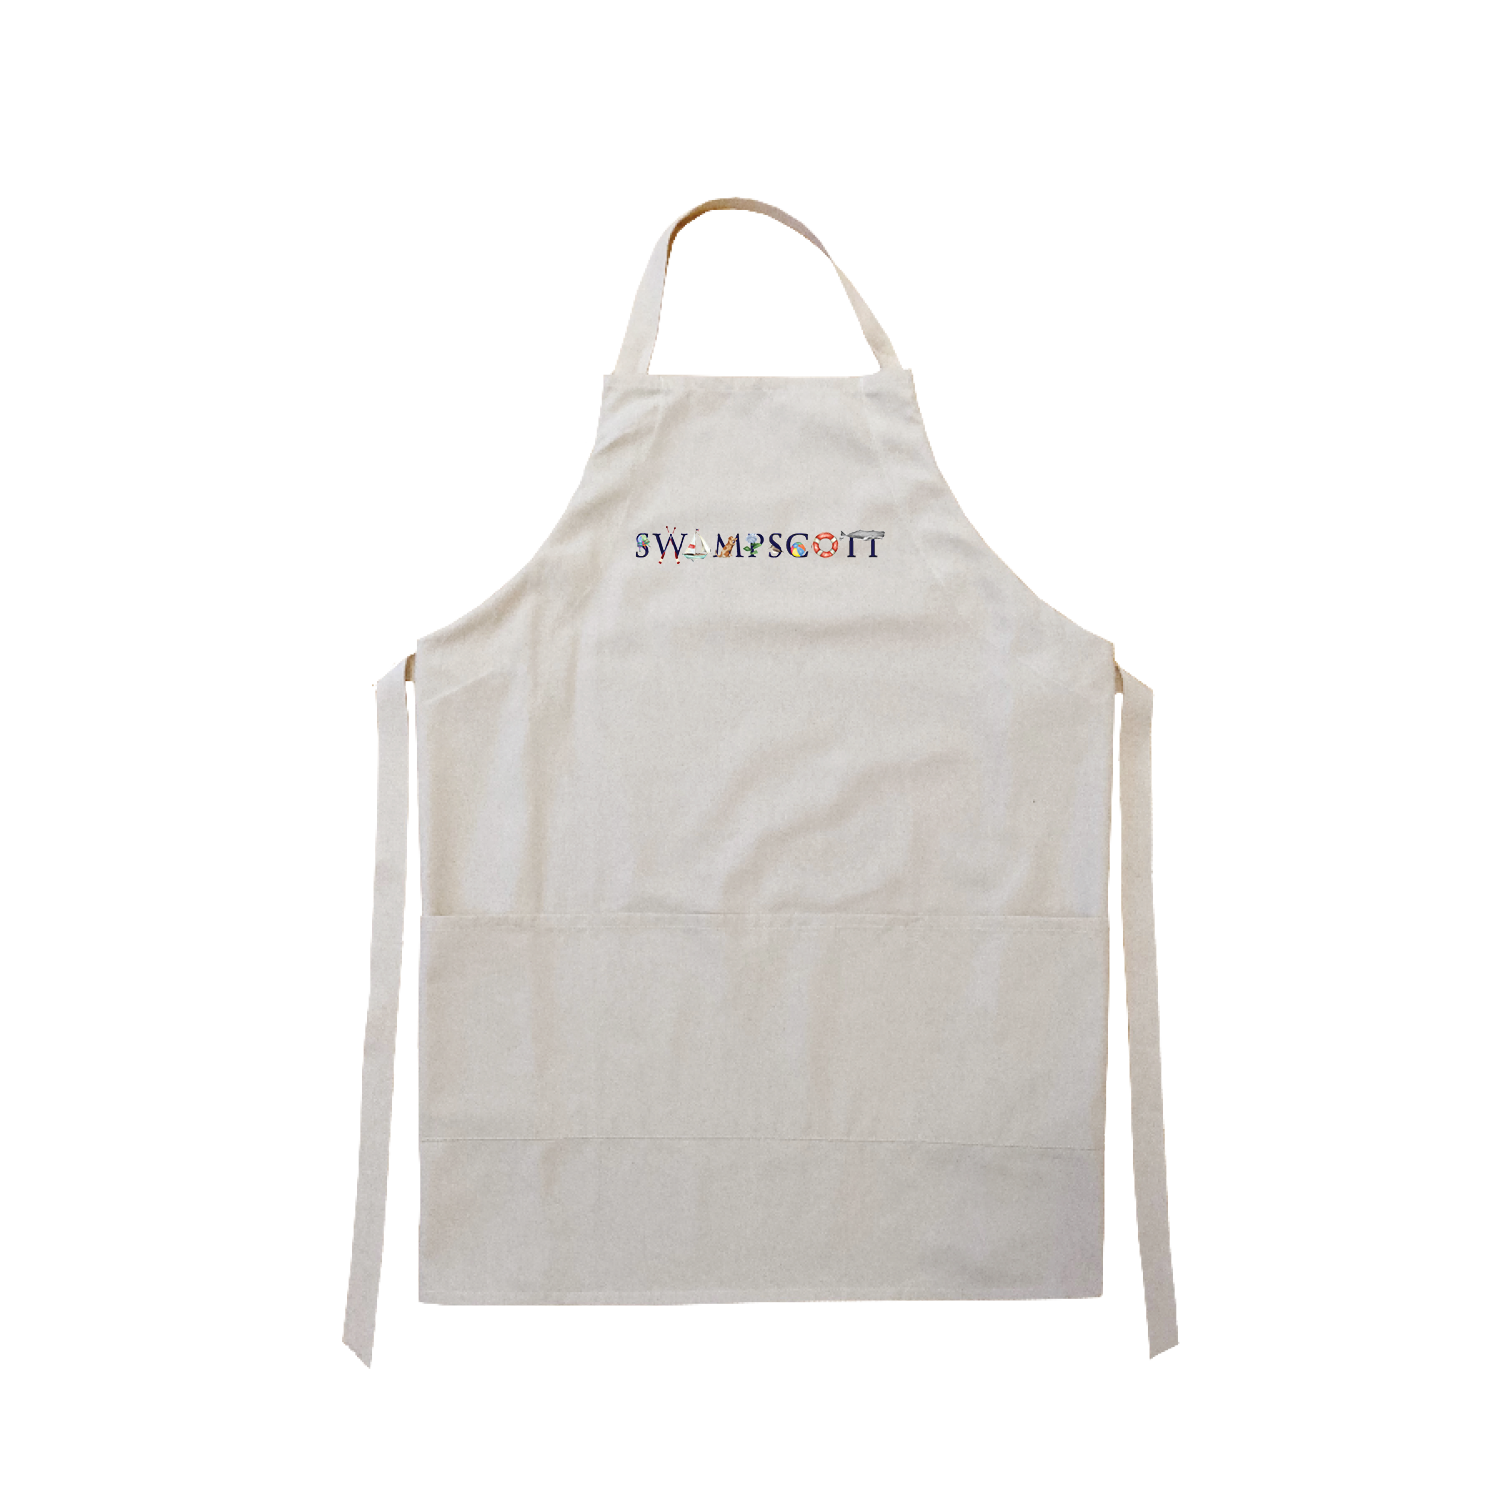 swampscott apron